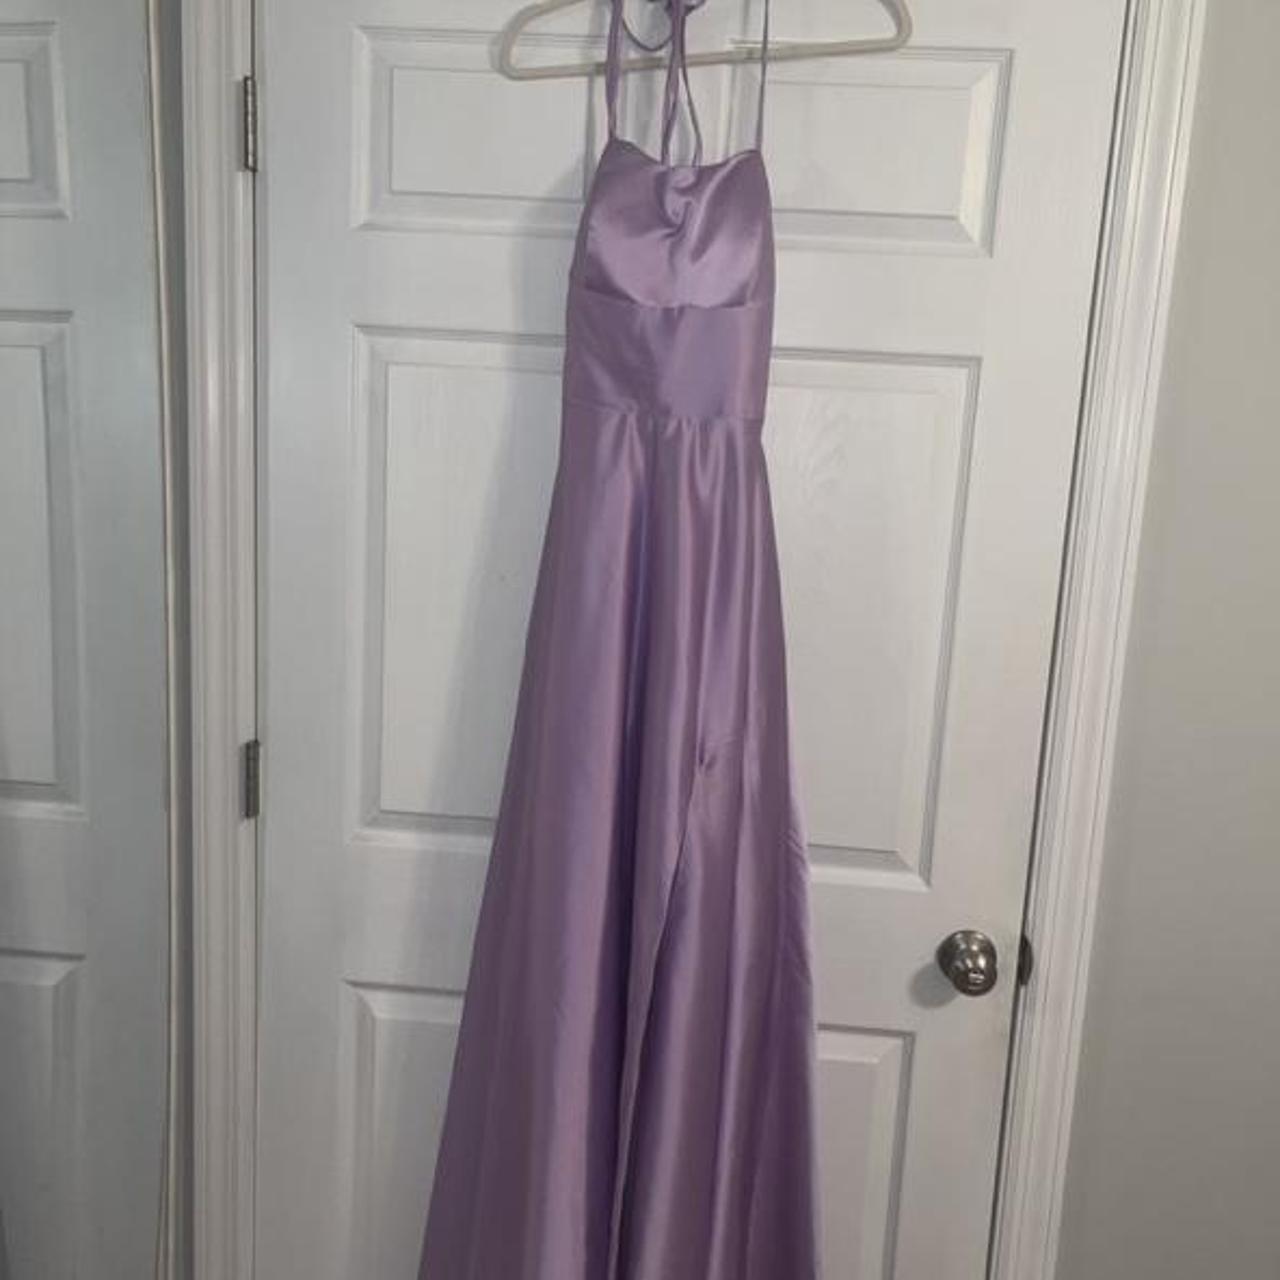 Amazon lilac prom dress Size Medium Brand... - Depop